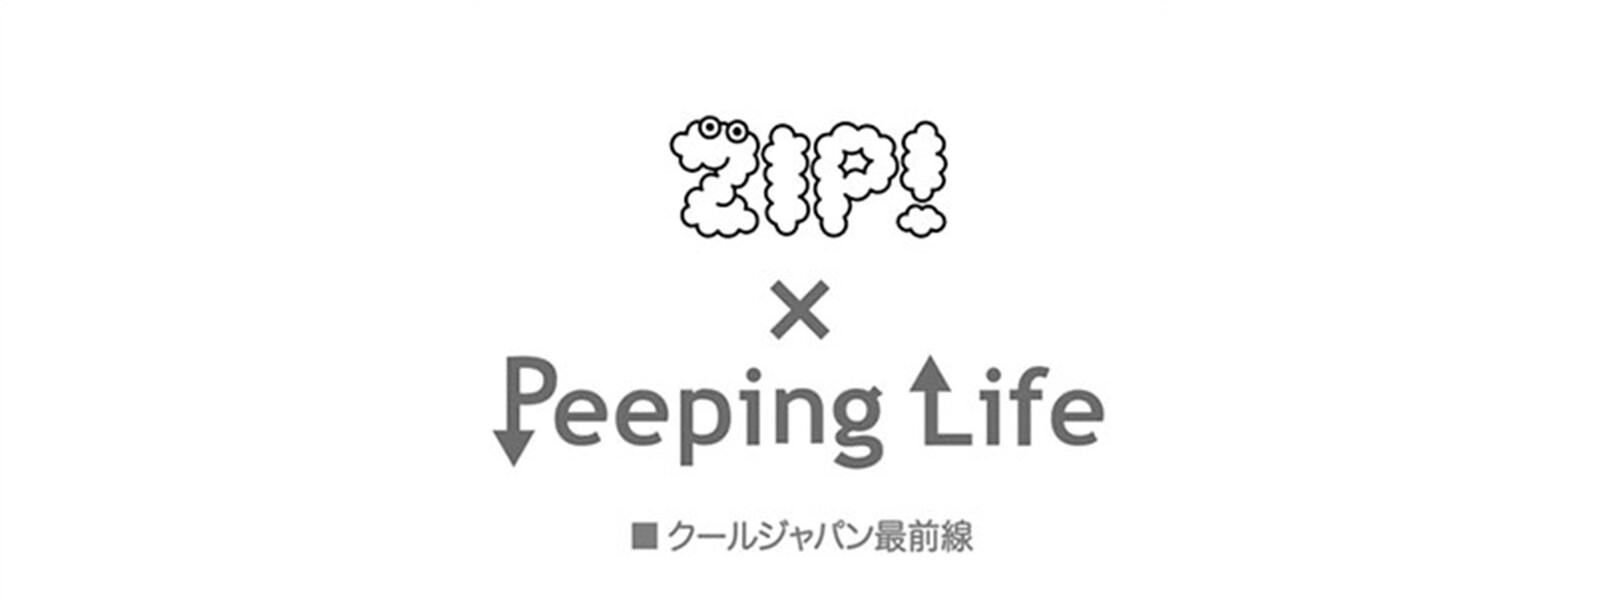 ZIP!×Peeping Life TV クールジャパン最前線の動画 - やまがたZIP!